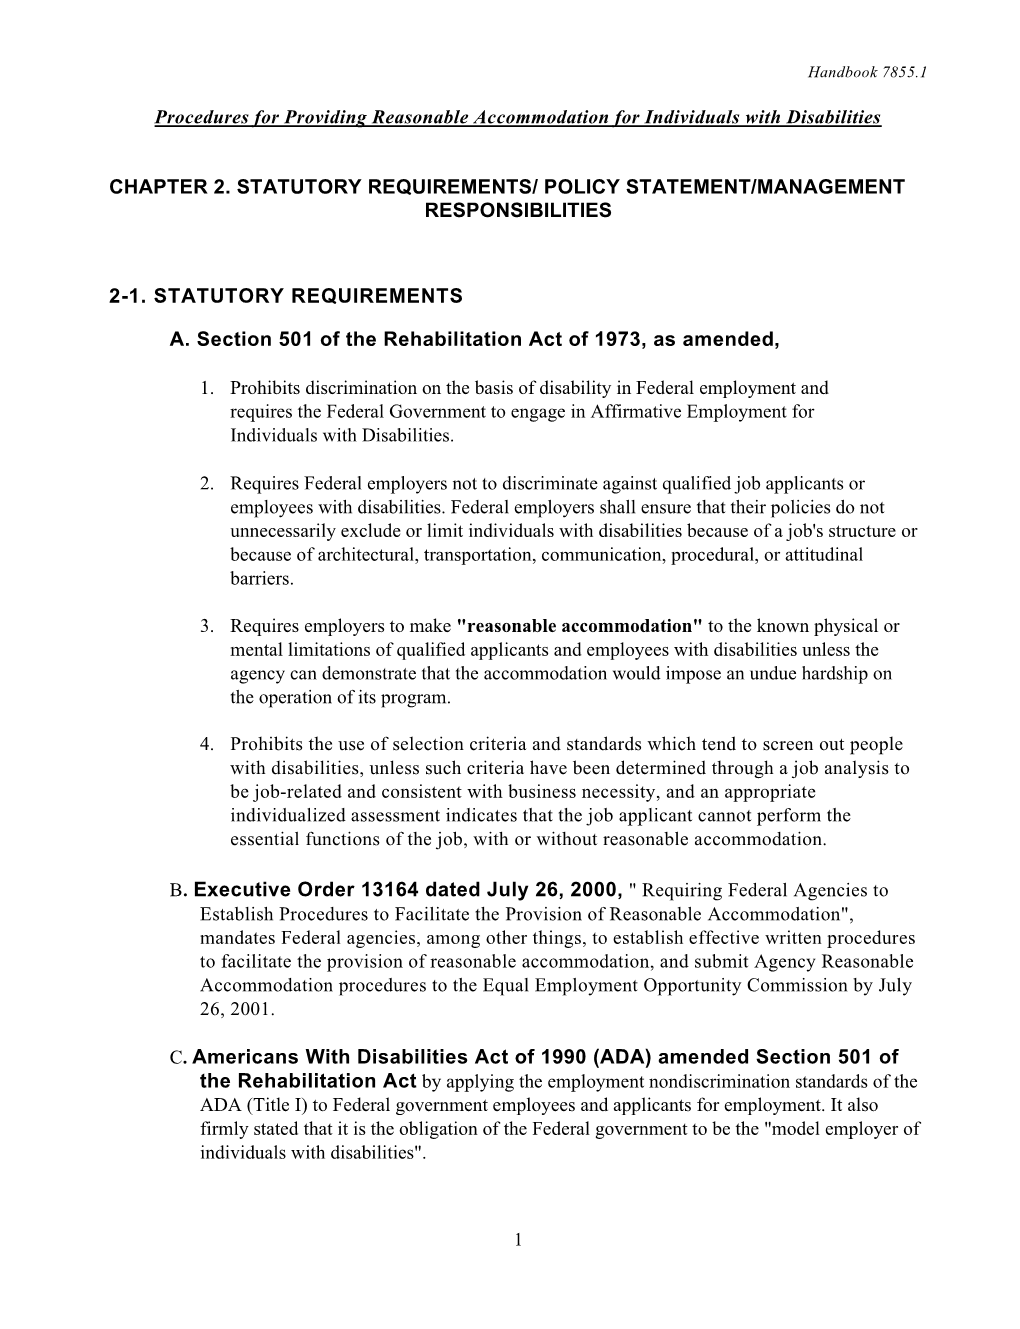 Reasonable Accommodation Handbook Chpt 2 Statutory Requirements